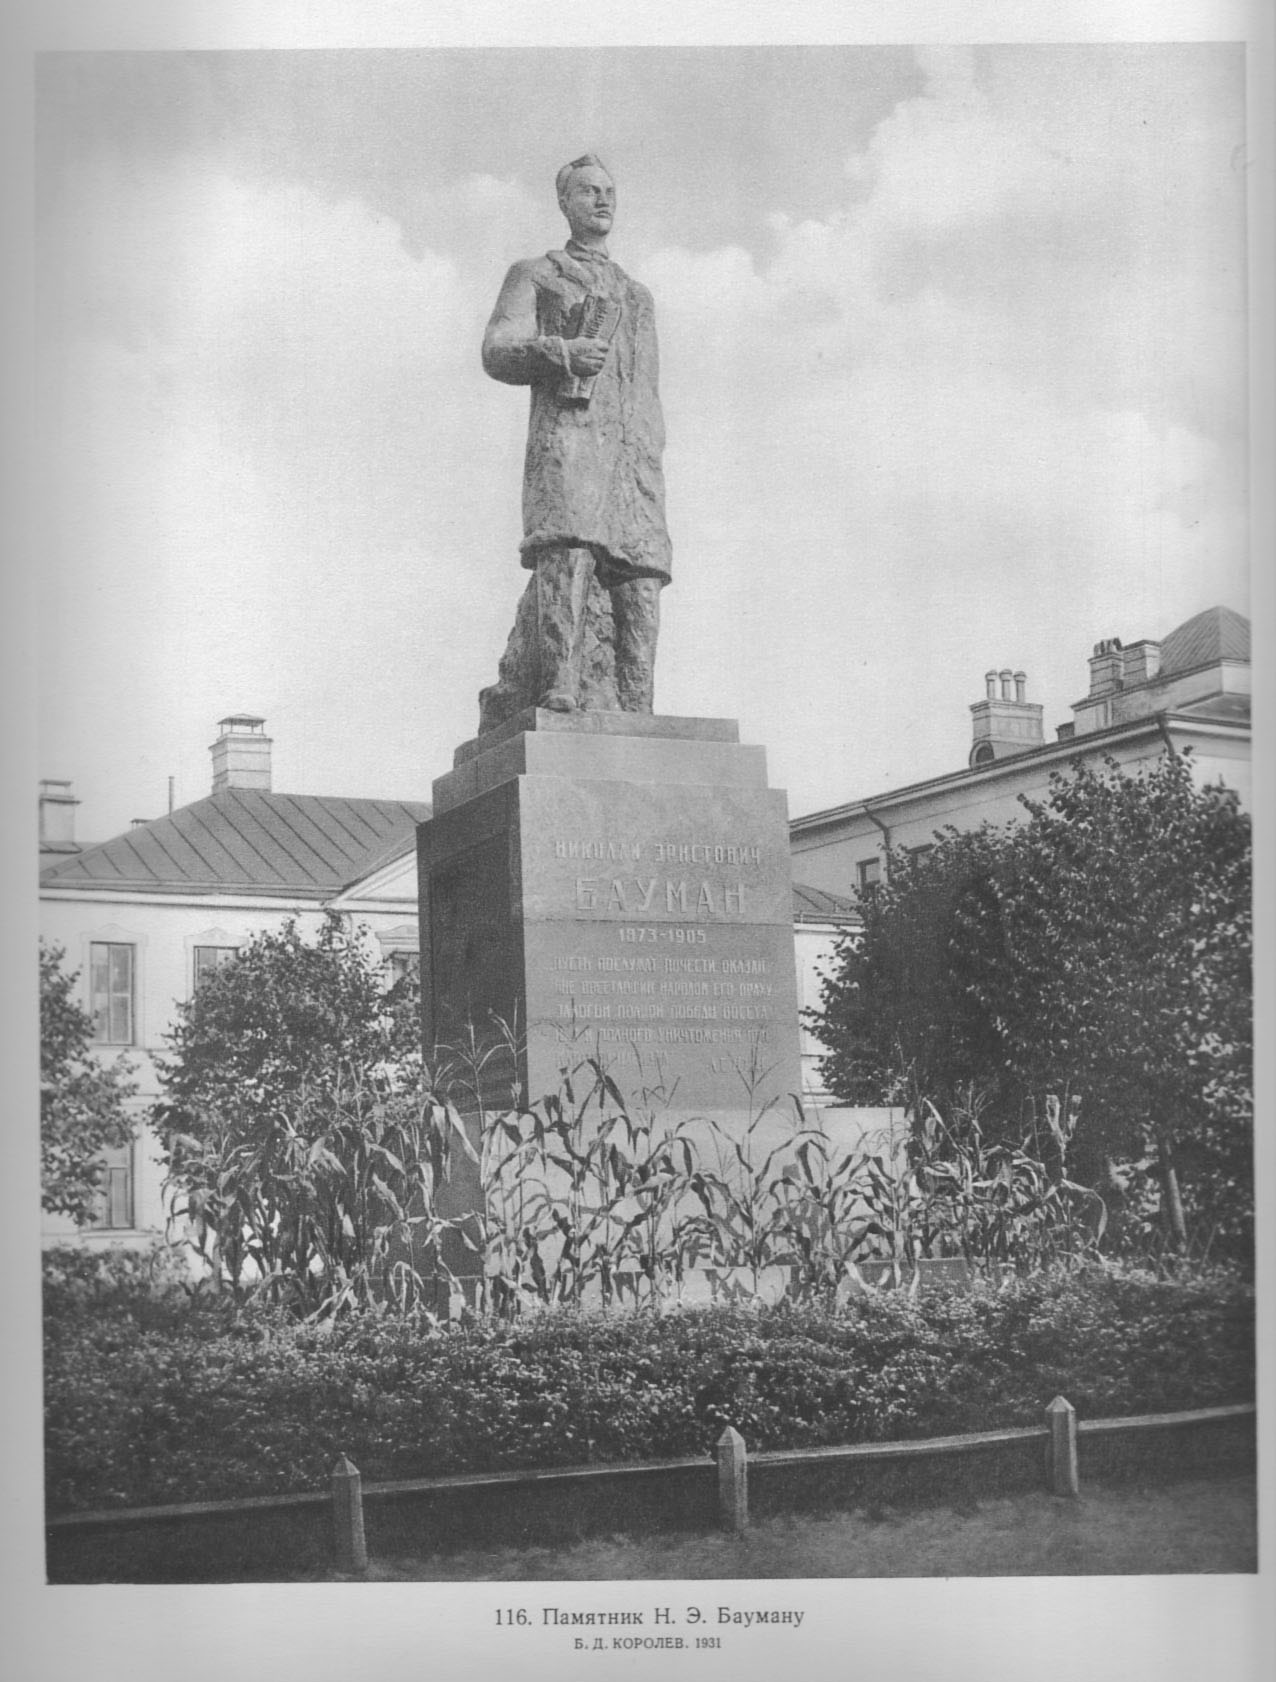 116. Памятник Н. Э. Бауману. Б. Д. Королев. 1931